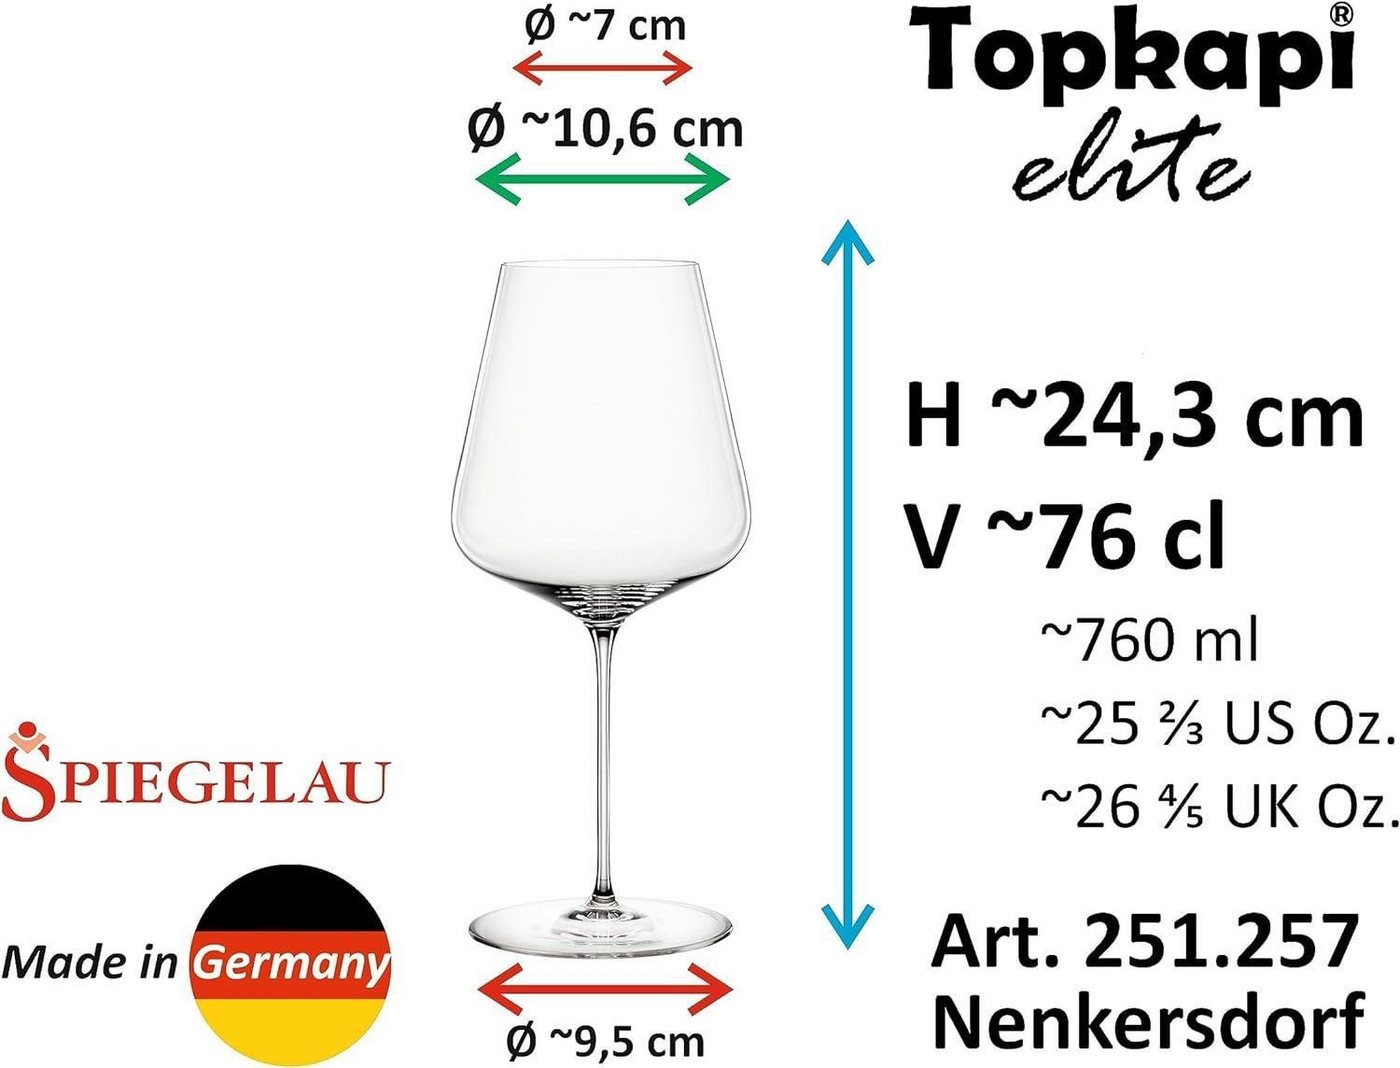 Topkapi elite Cocktailglas Topkapi elite Aperol Spritz Glas Nenkersdorf I 2 Stück, Kristallglas von Topkapi elite